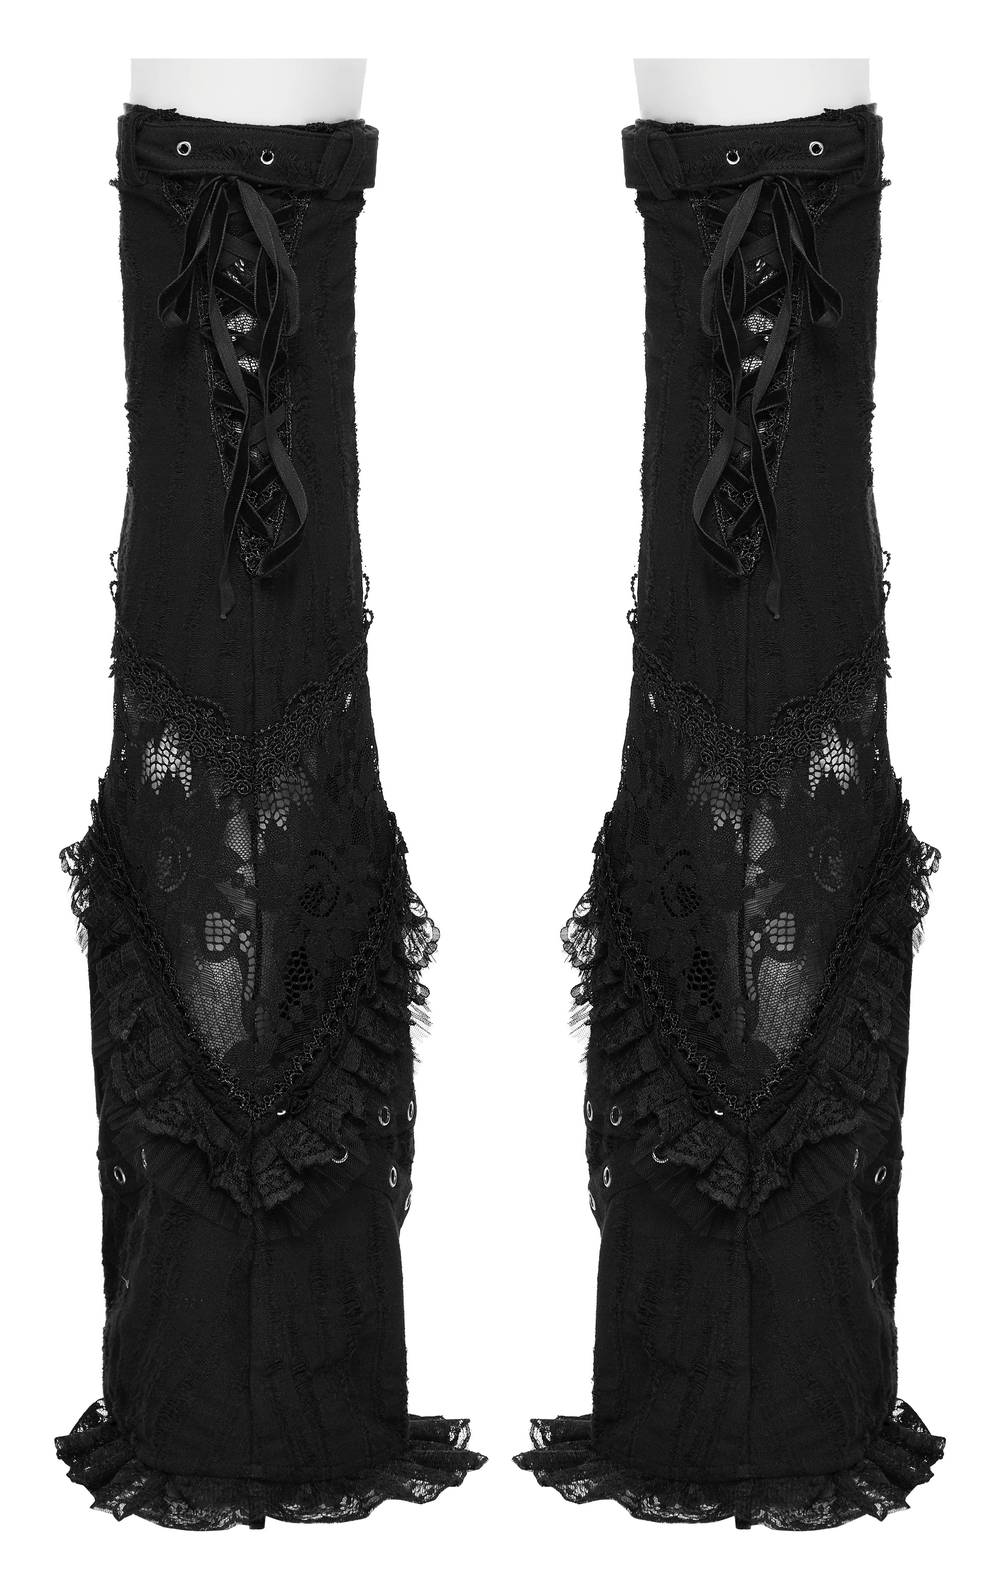 Stylish Gothic Daily Leg Warmers with Elegant Lace